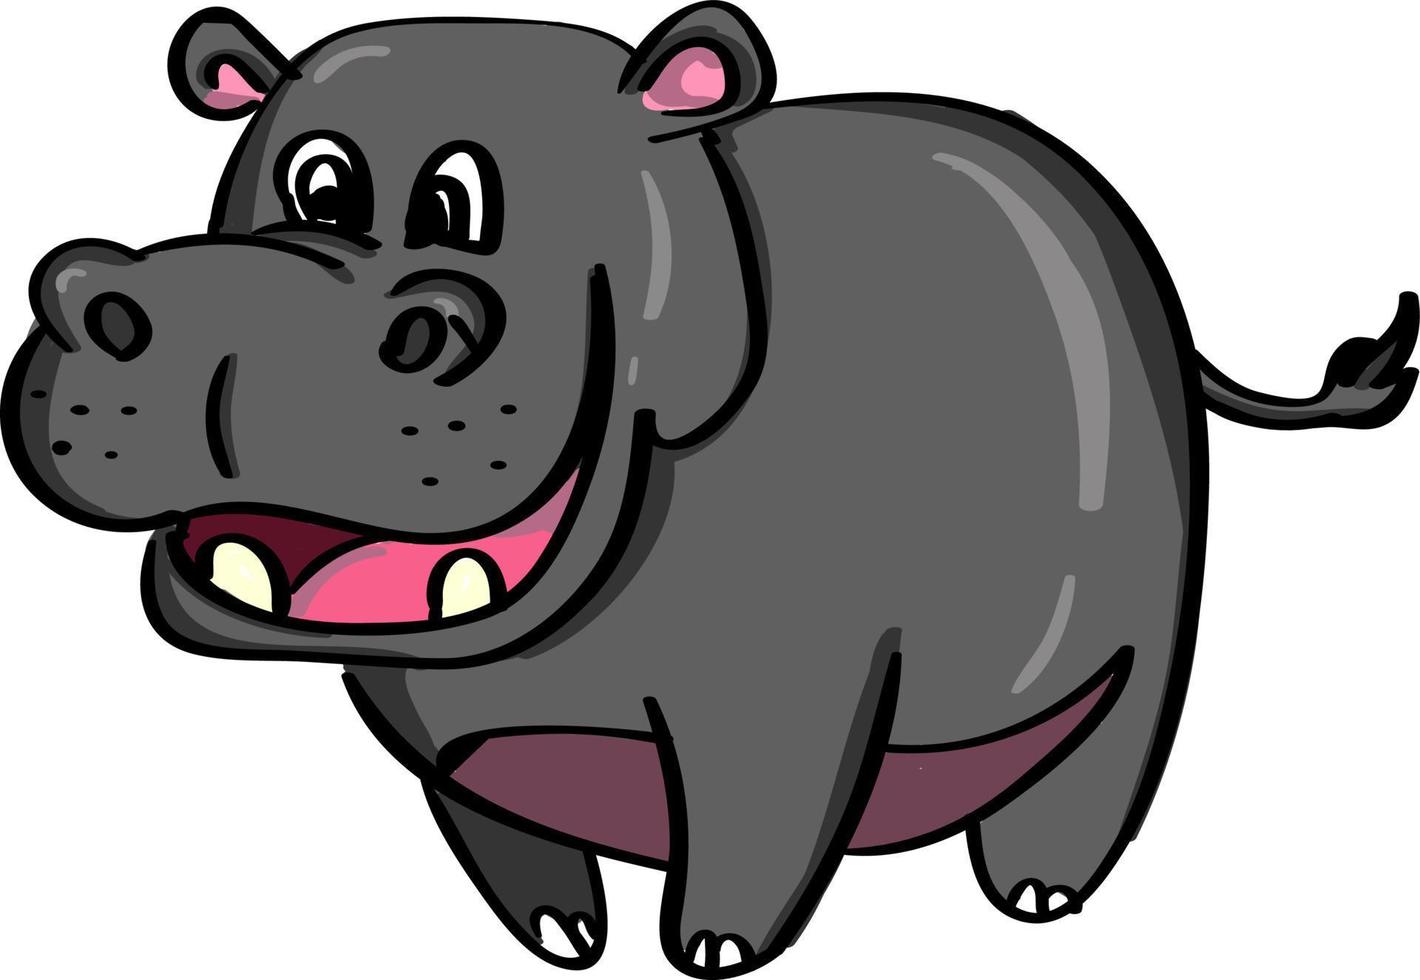 Fat hippo, illustration, vector on white background.